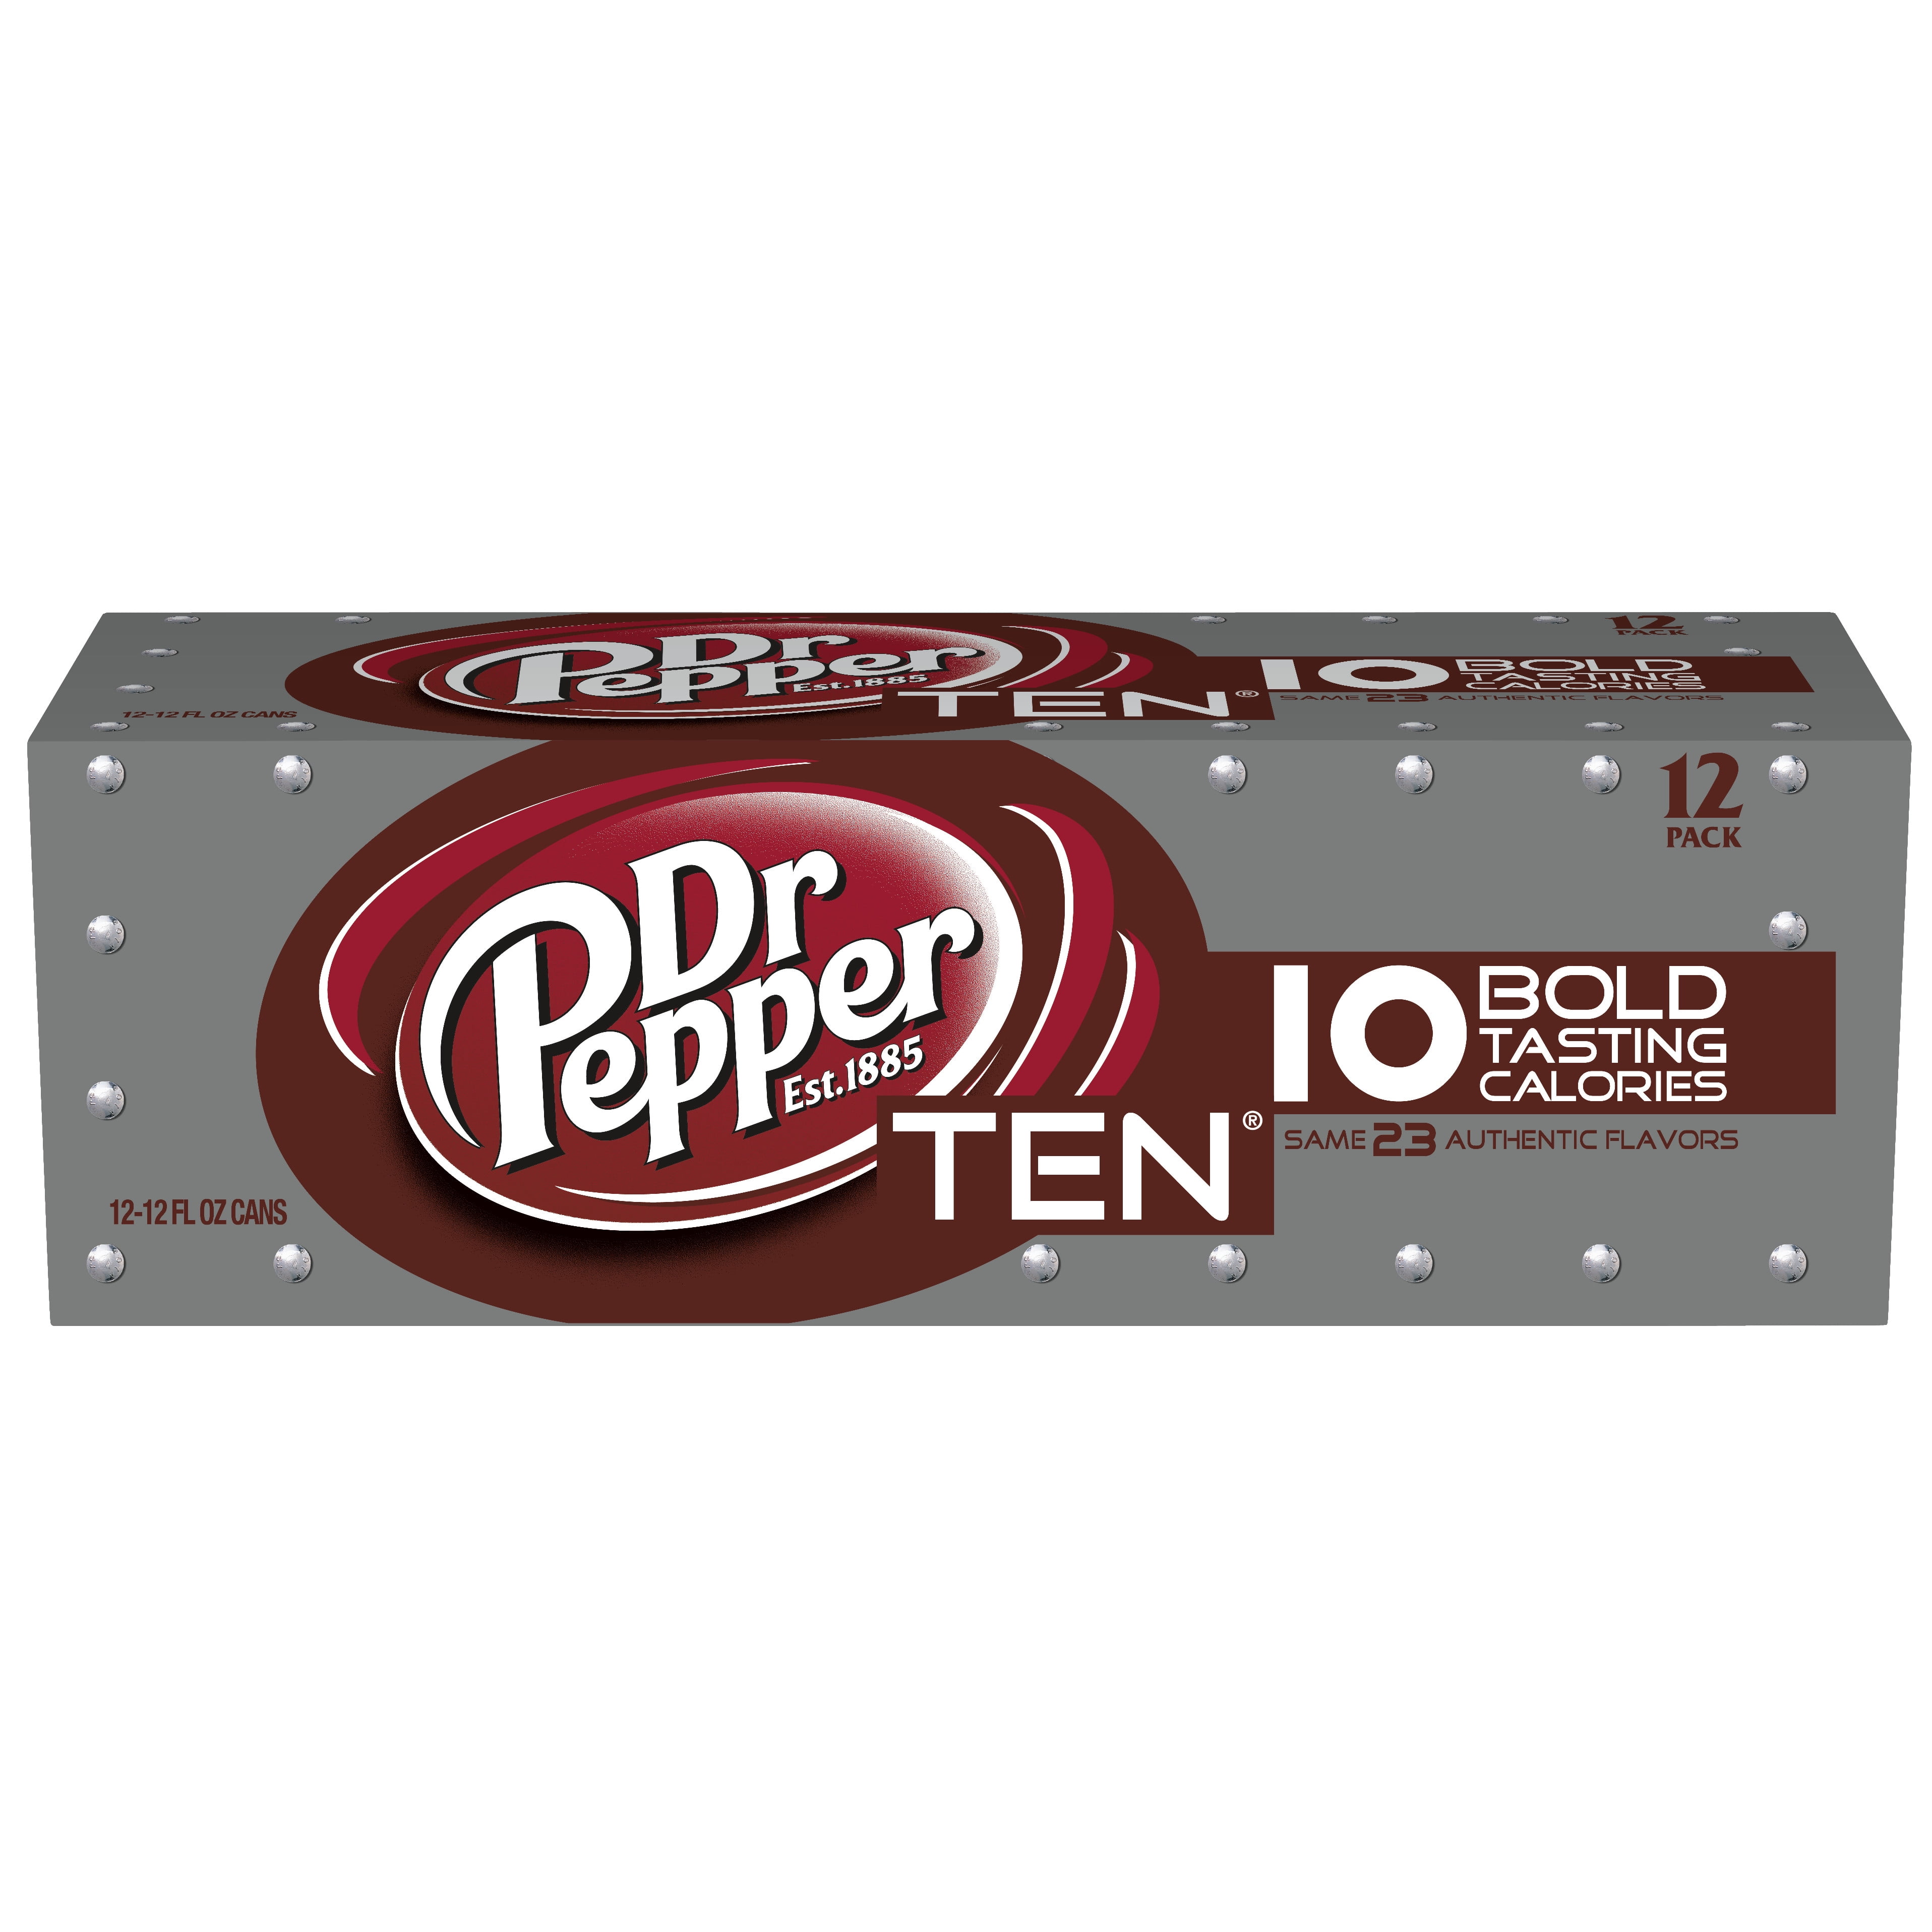 Pepper cream. Доктор Пеппер. Доктор Пеппер 1885. Dr Pepper Cream Soda. Др Пеппер крем.